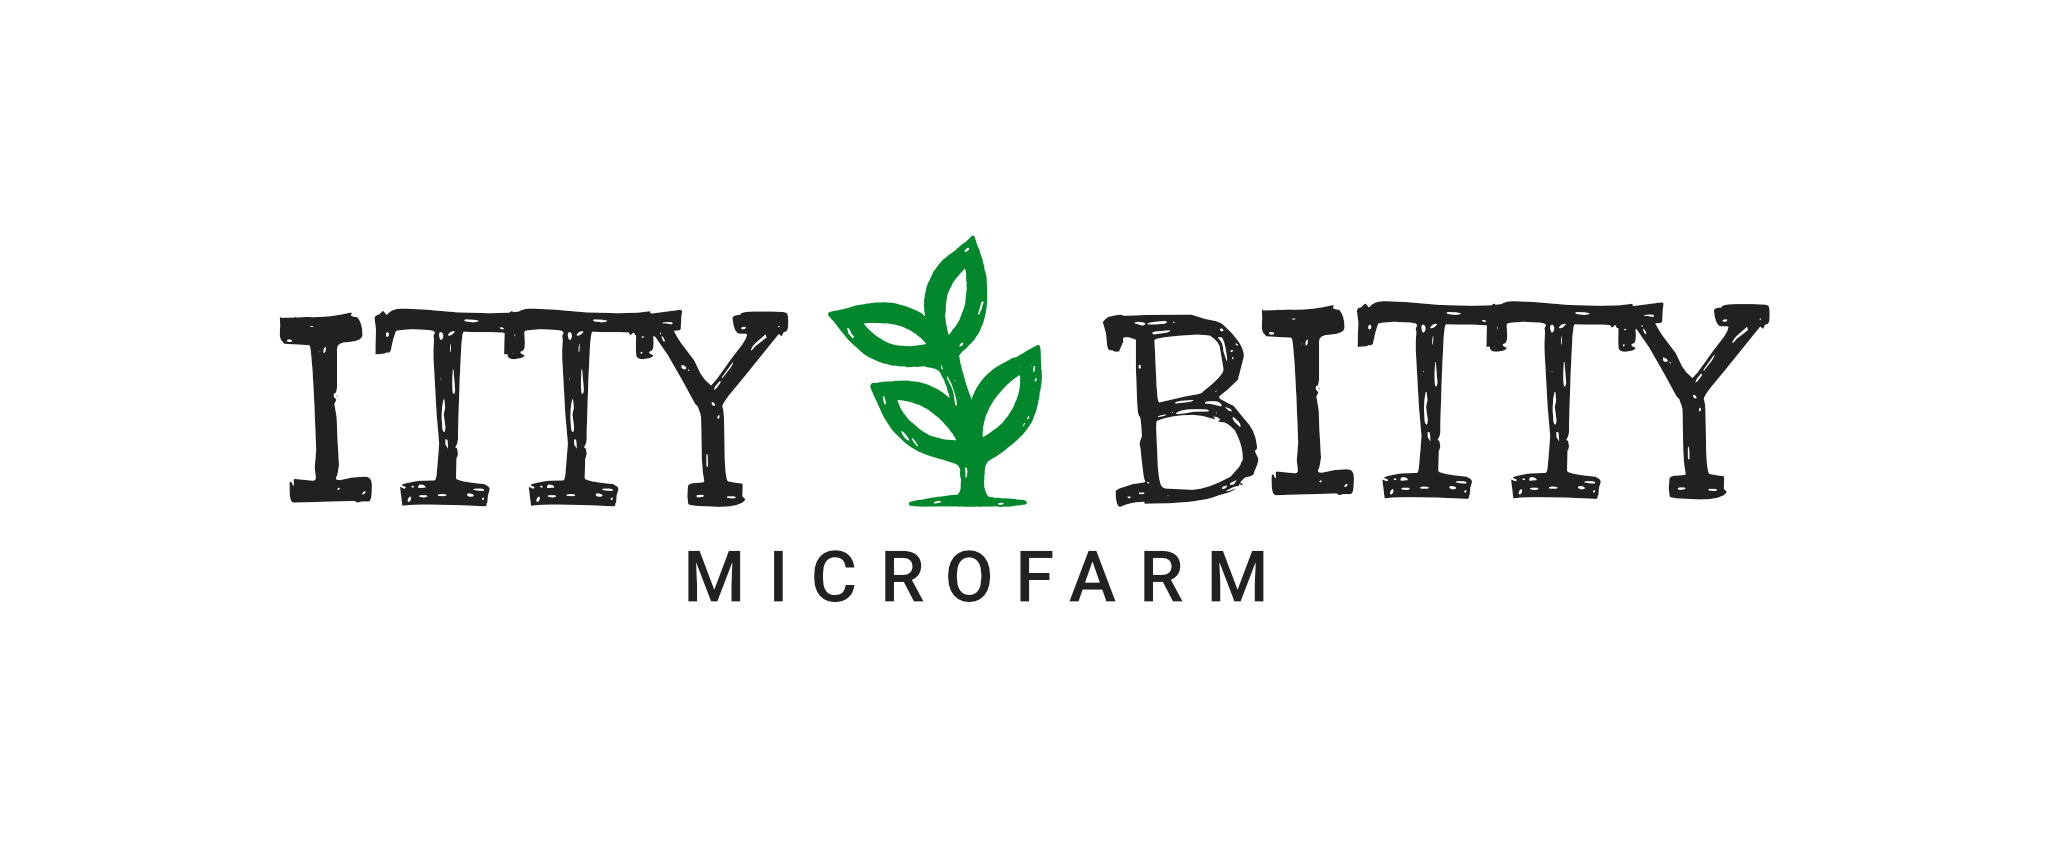 Itty Bitty Micro Farm Springfield Illinois